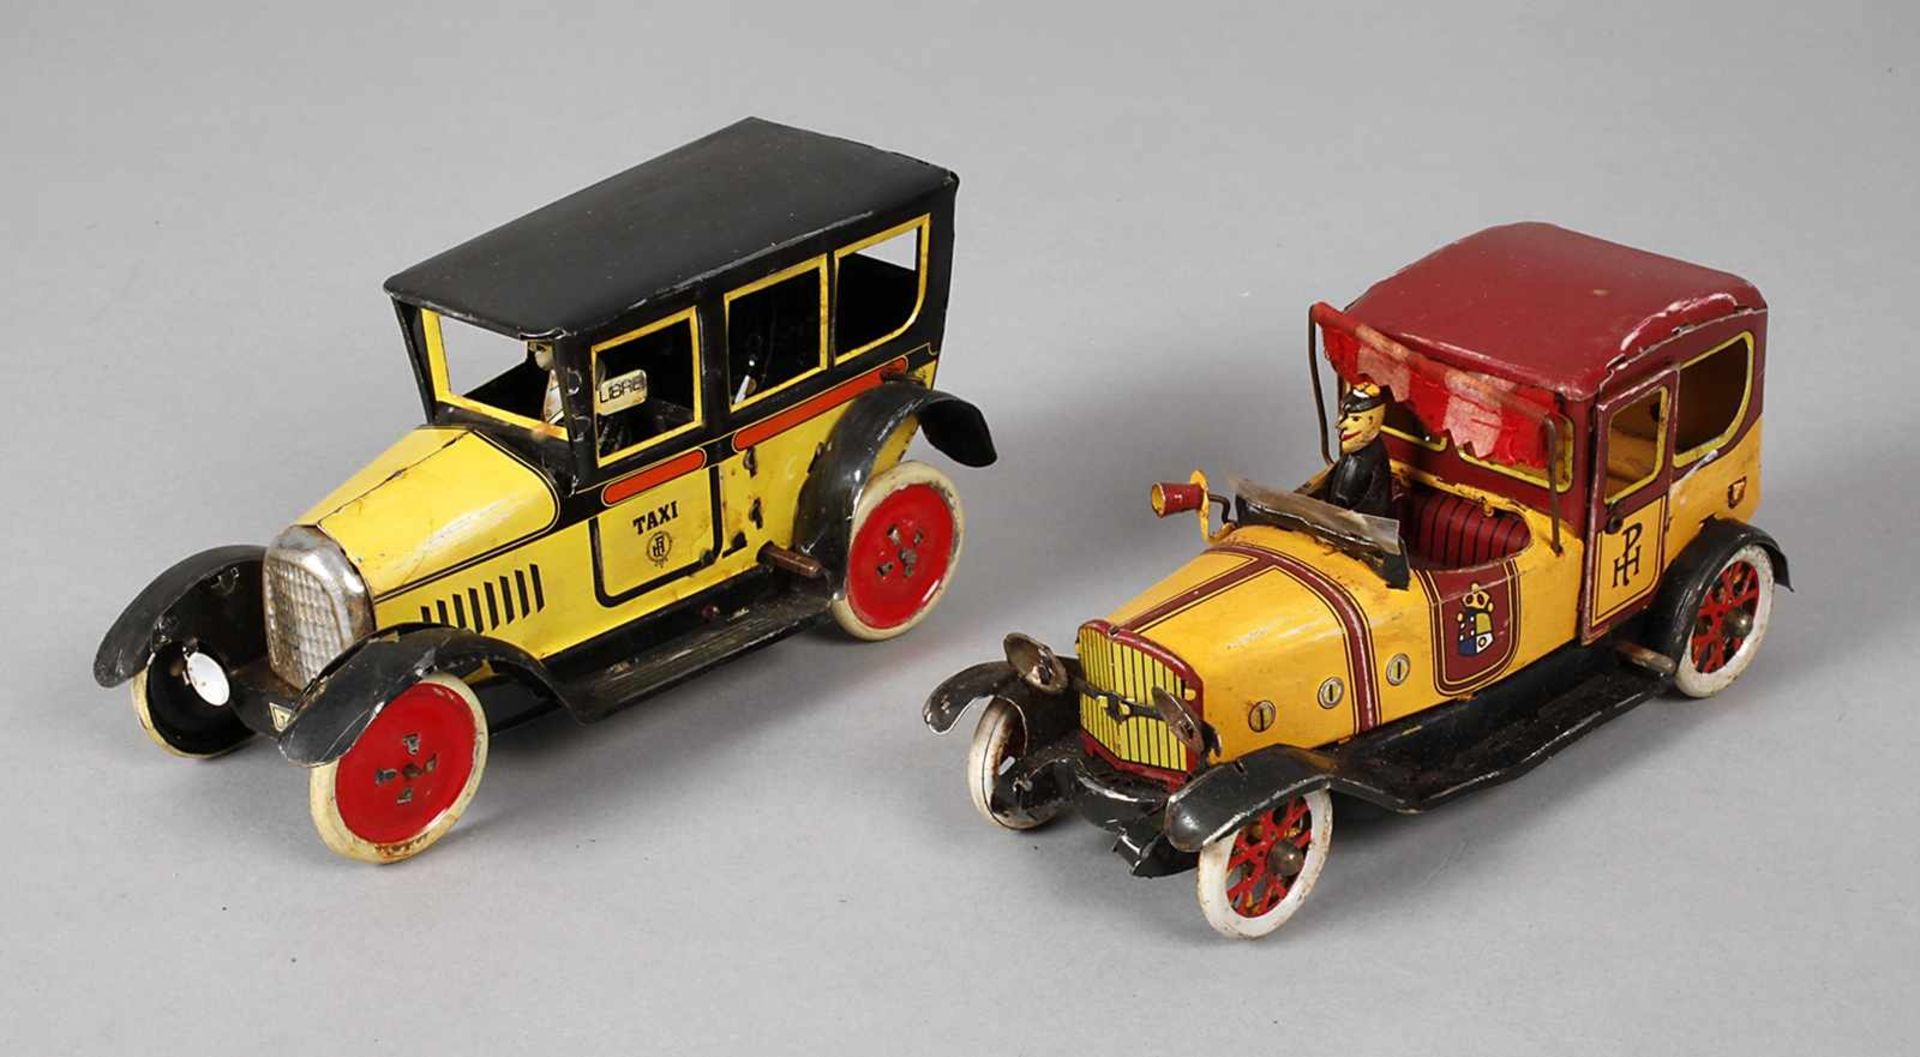 Paya zwei Oldtimer-ModelleSpanien, 1930er Jahre, gemarkt mit Firmenlogo, Blech farbig lithografiert,